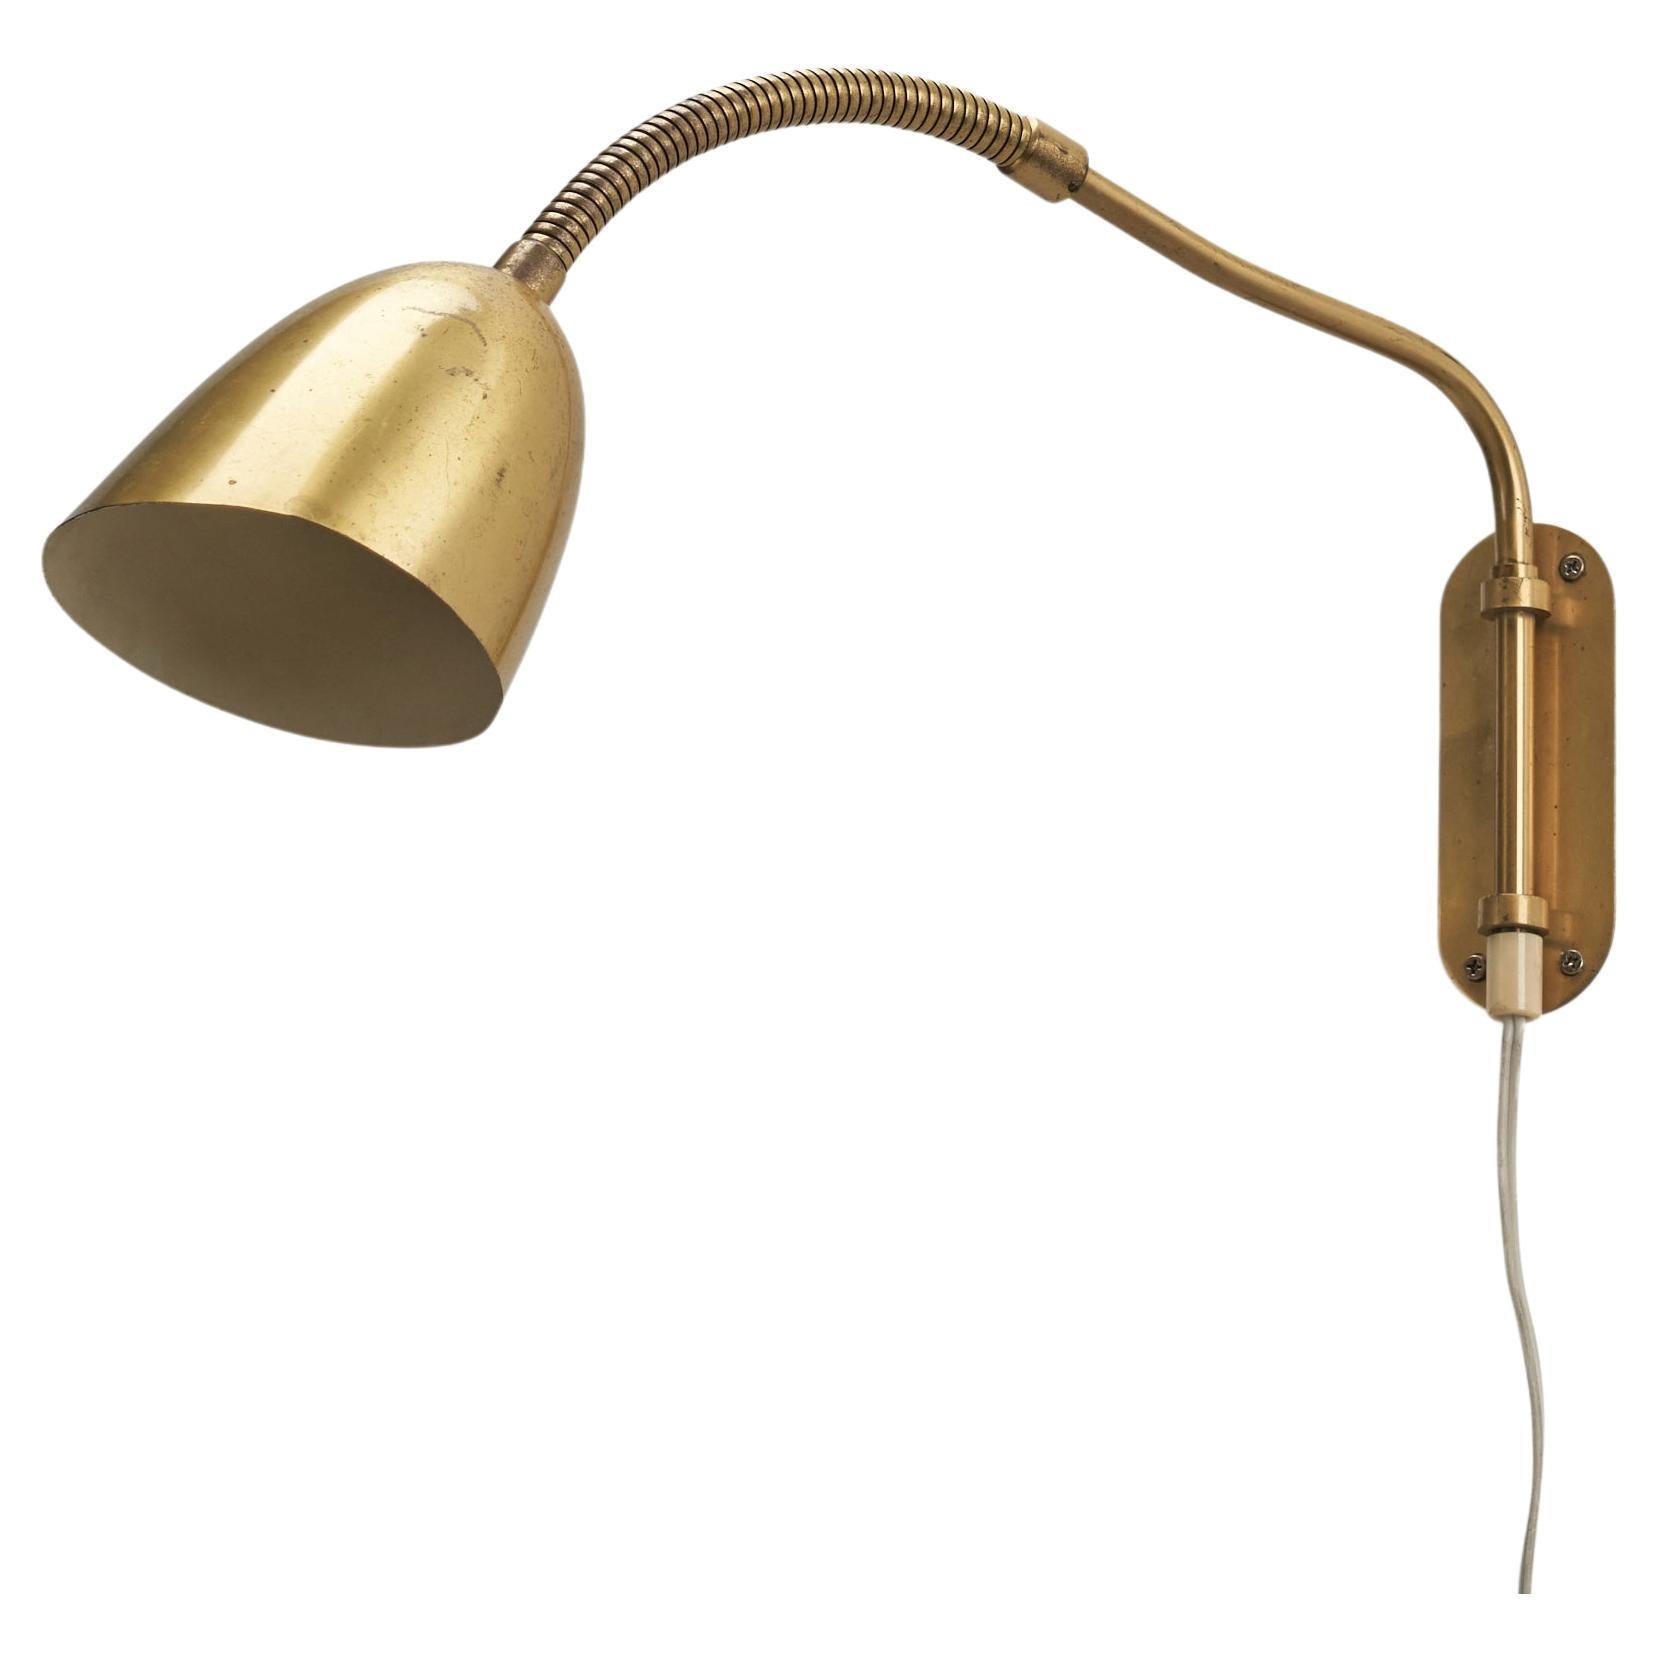 Ystad Metall, Adjustable Wall Light, Brass, Sweden, 1940s For Sale